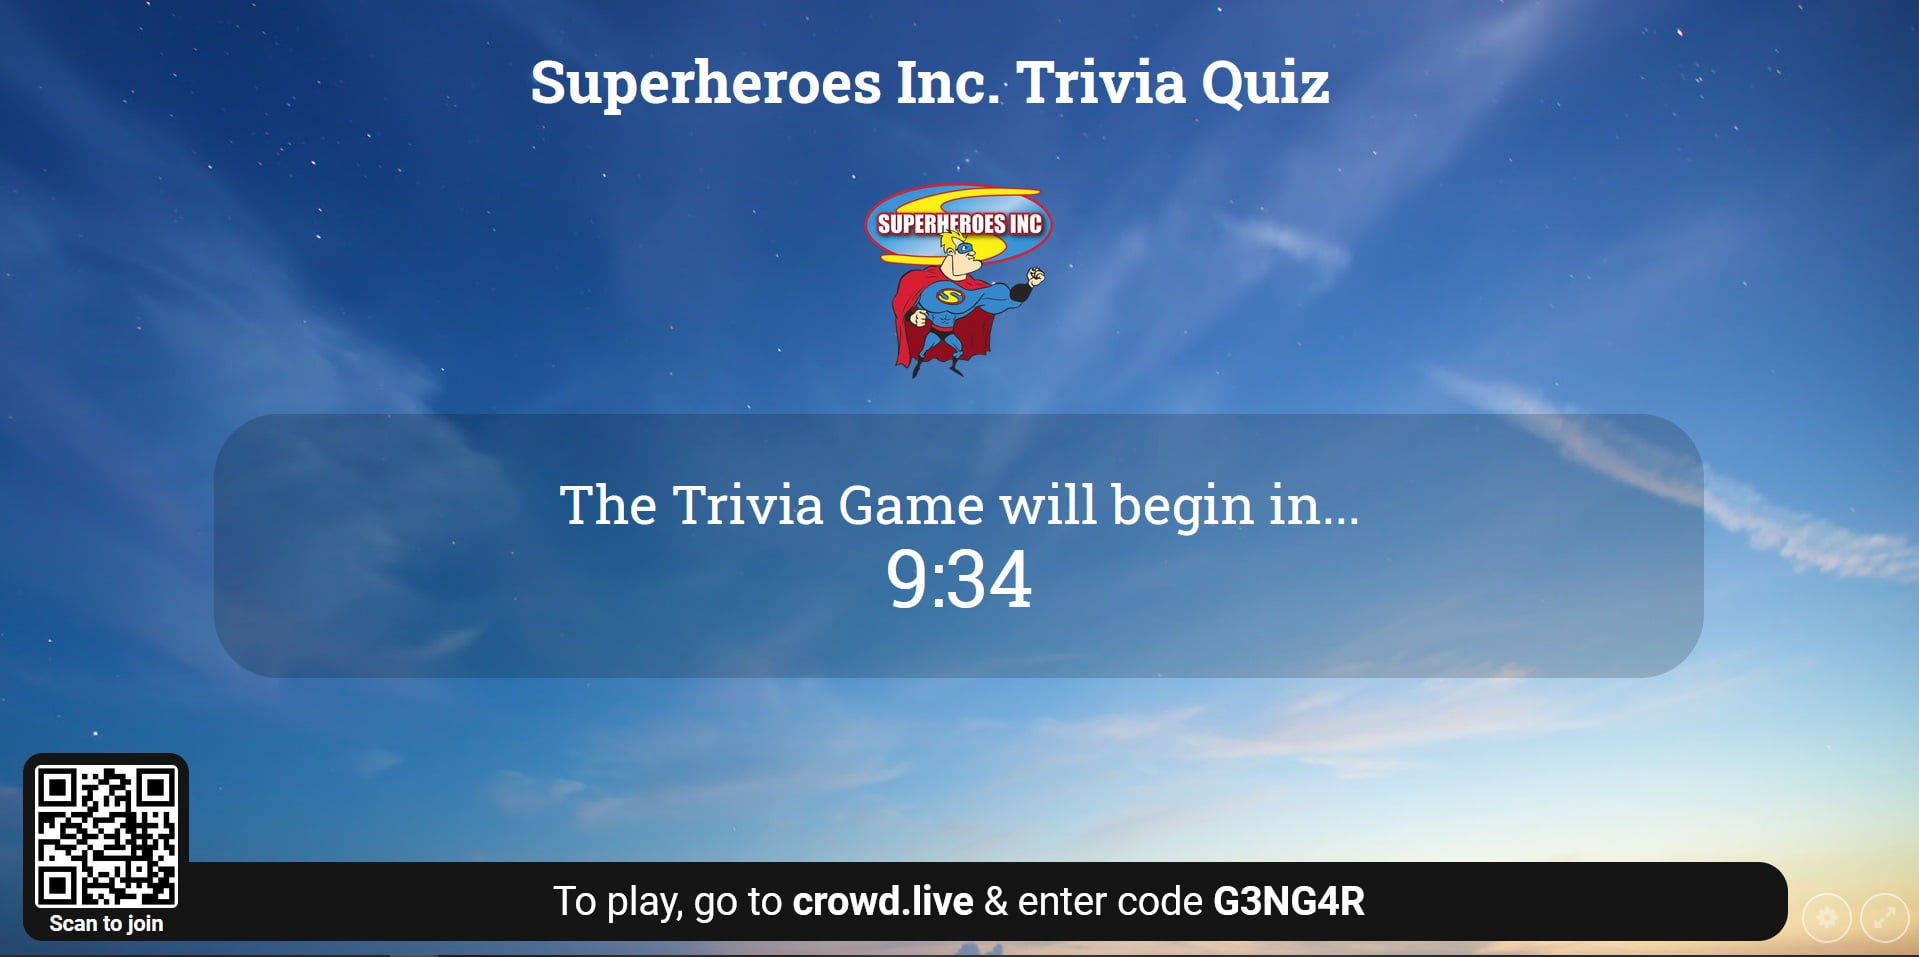 Online Trivia Event Login Timer Pic - Superheroes Inc